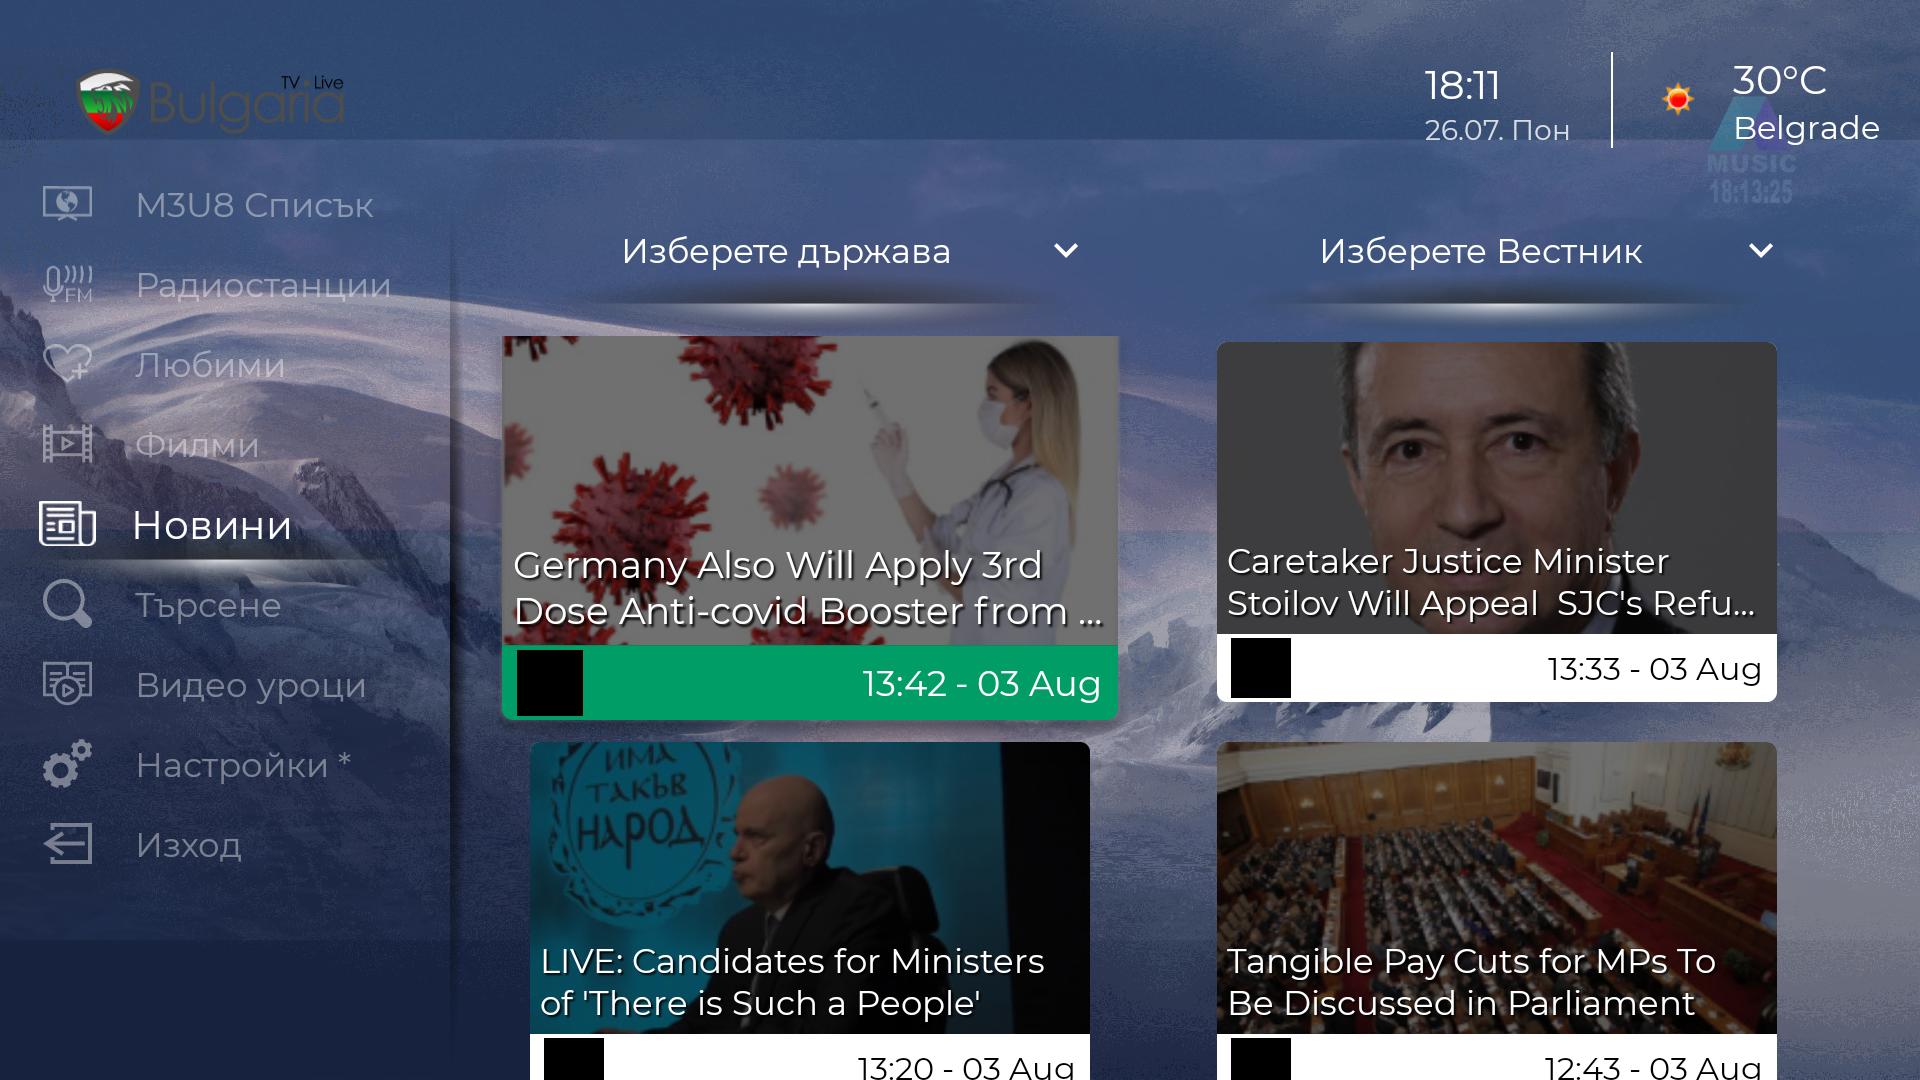 Bulgaria Live 1.2.04 Screenshot 8